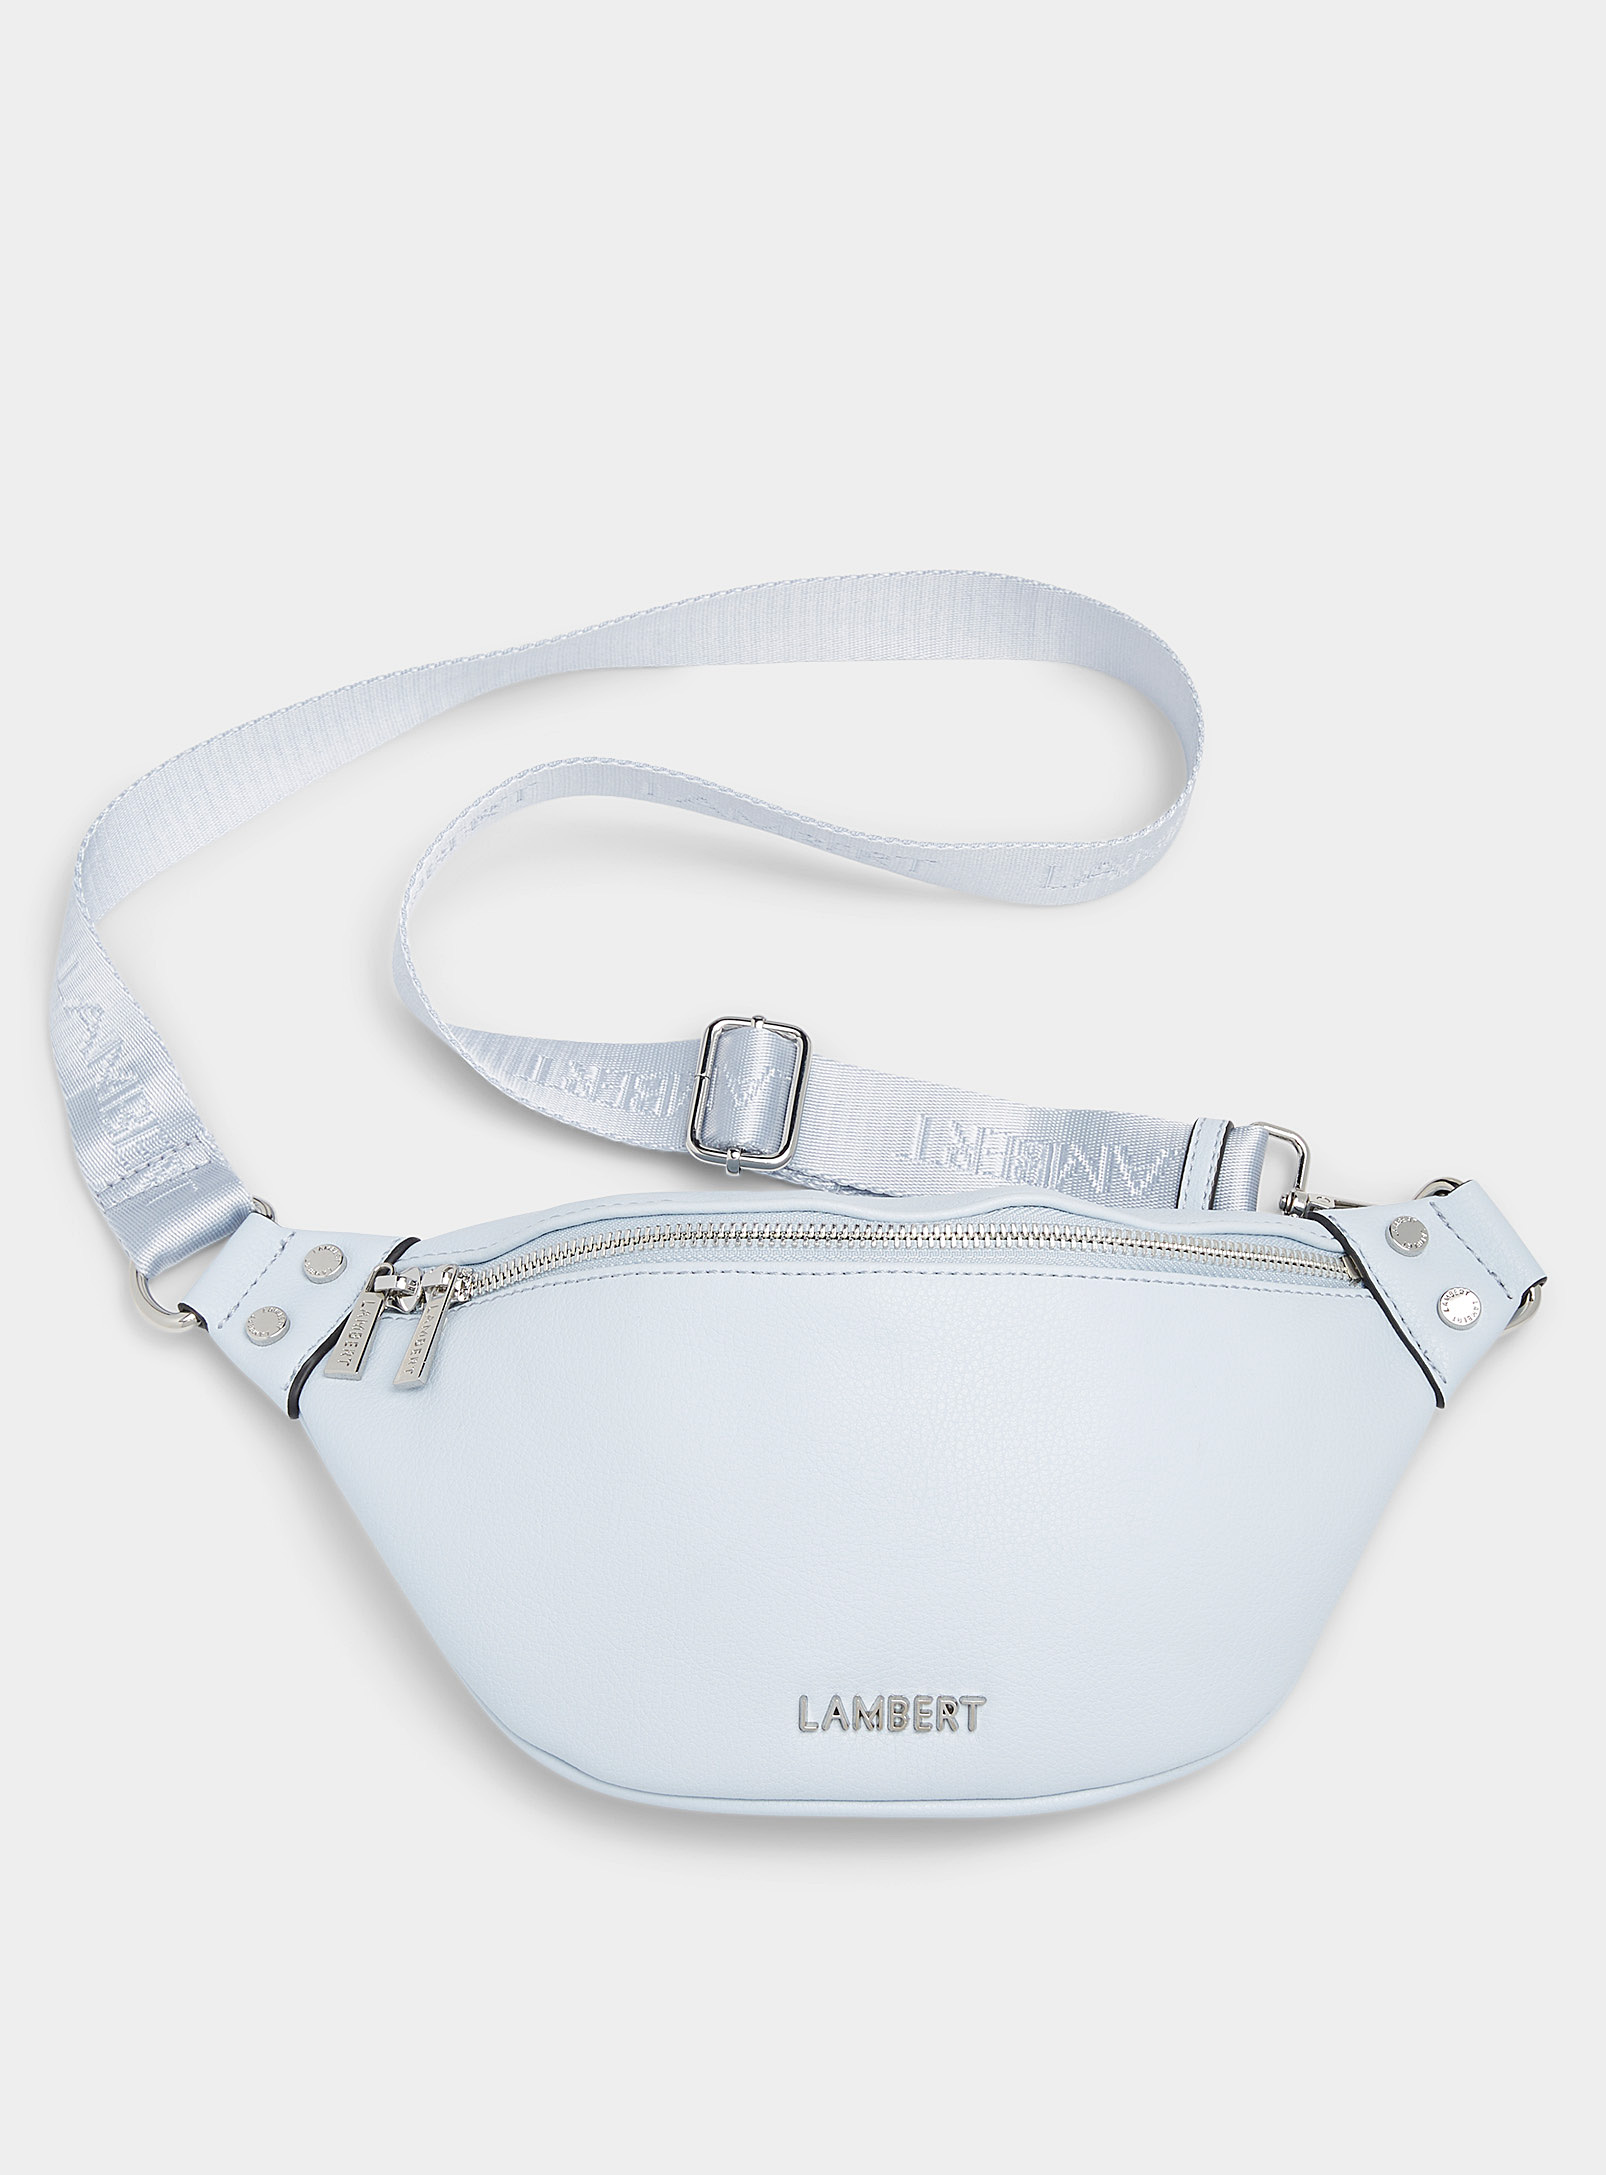 Lambert - Women's Sarah belt bag